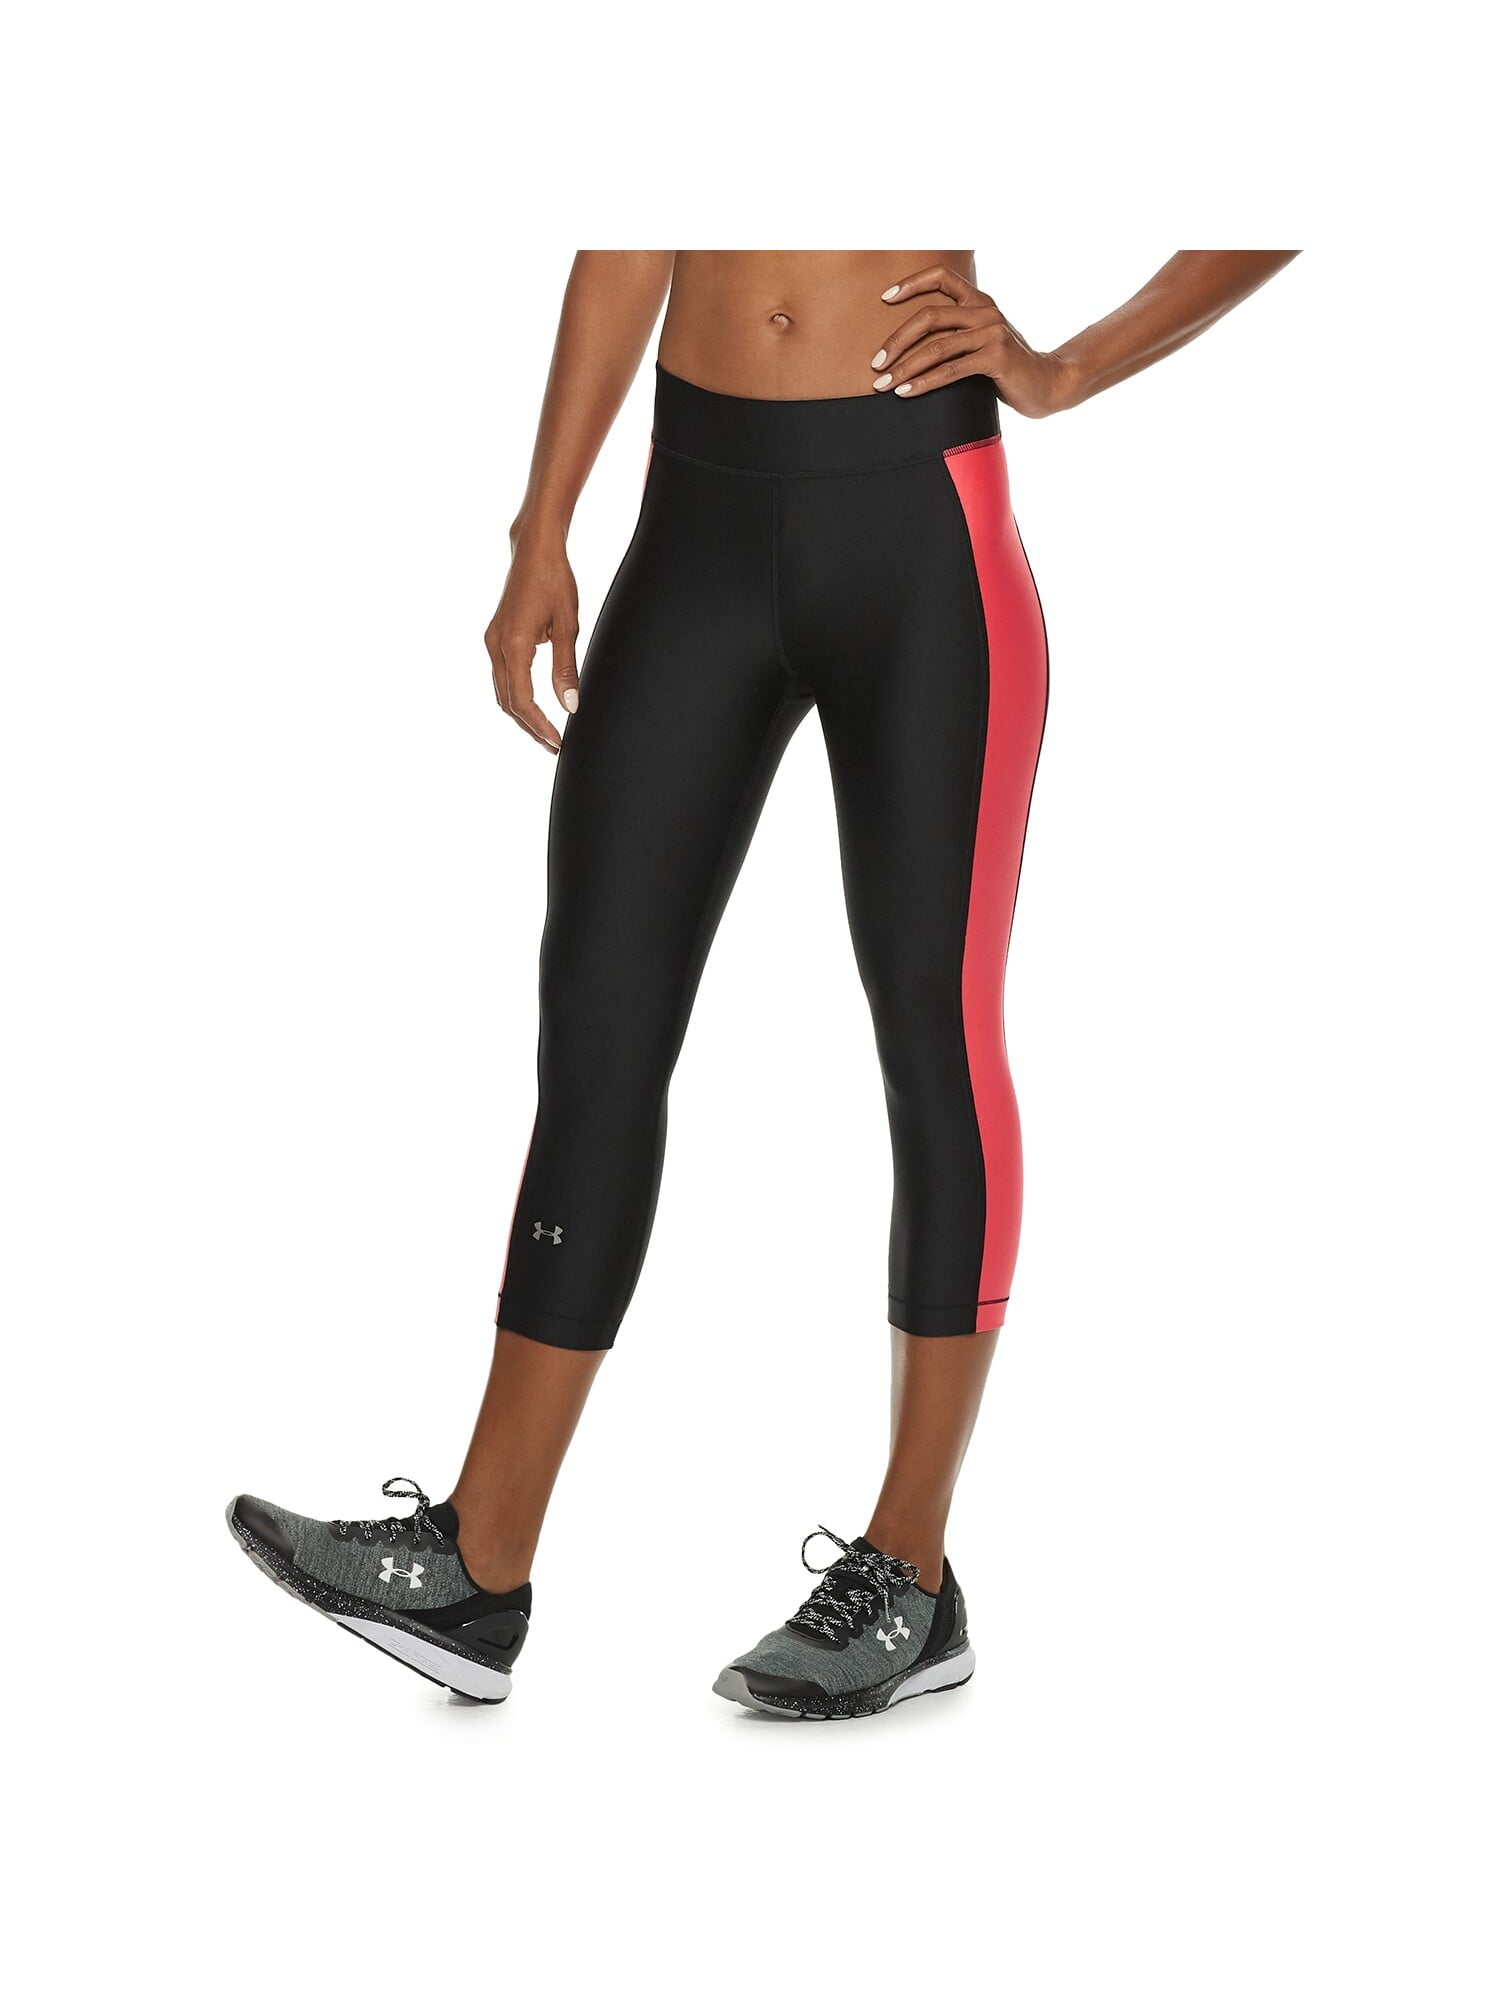 UNDER ARMOUR $35 Womens New Black Mid Rise Capri Color Block Leggings XL B+B